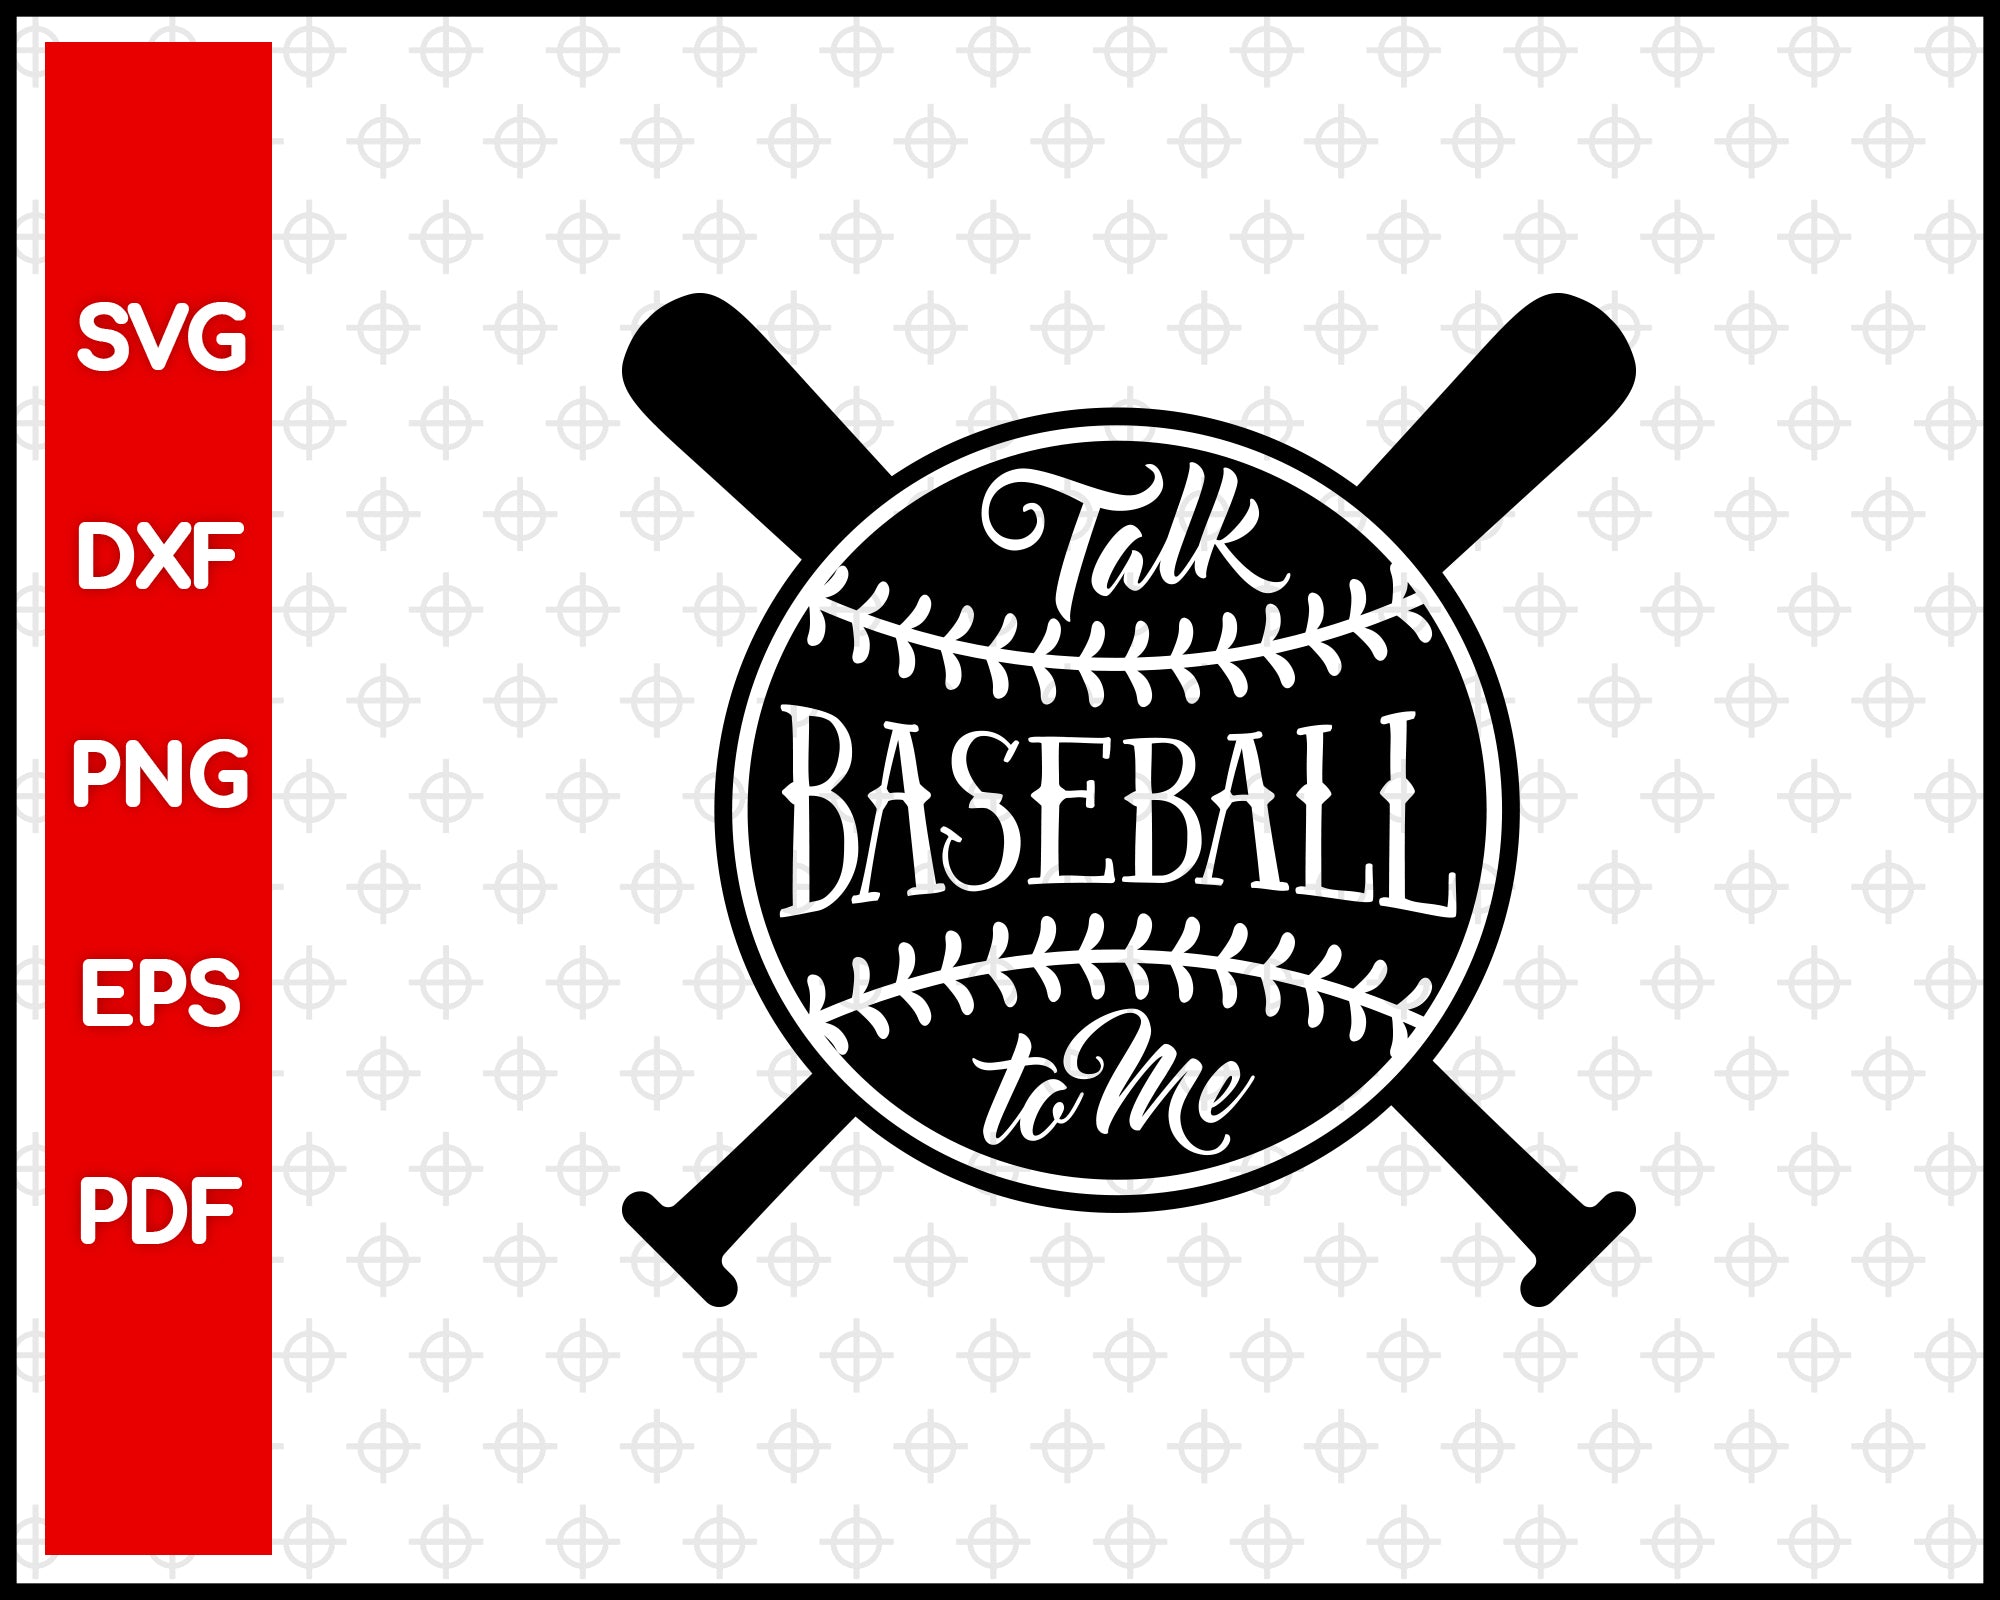 Talk Baseball to Me Baseball Cut File For Cricut svg, dxf, png, eps, pdf Silhouette Printable Files